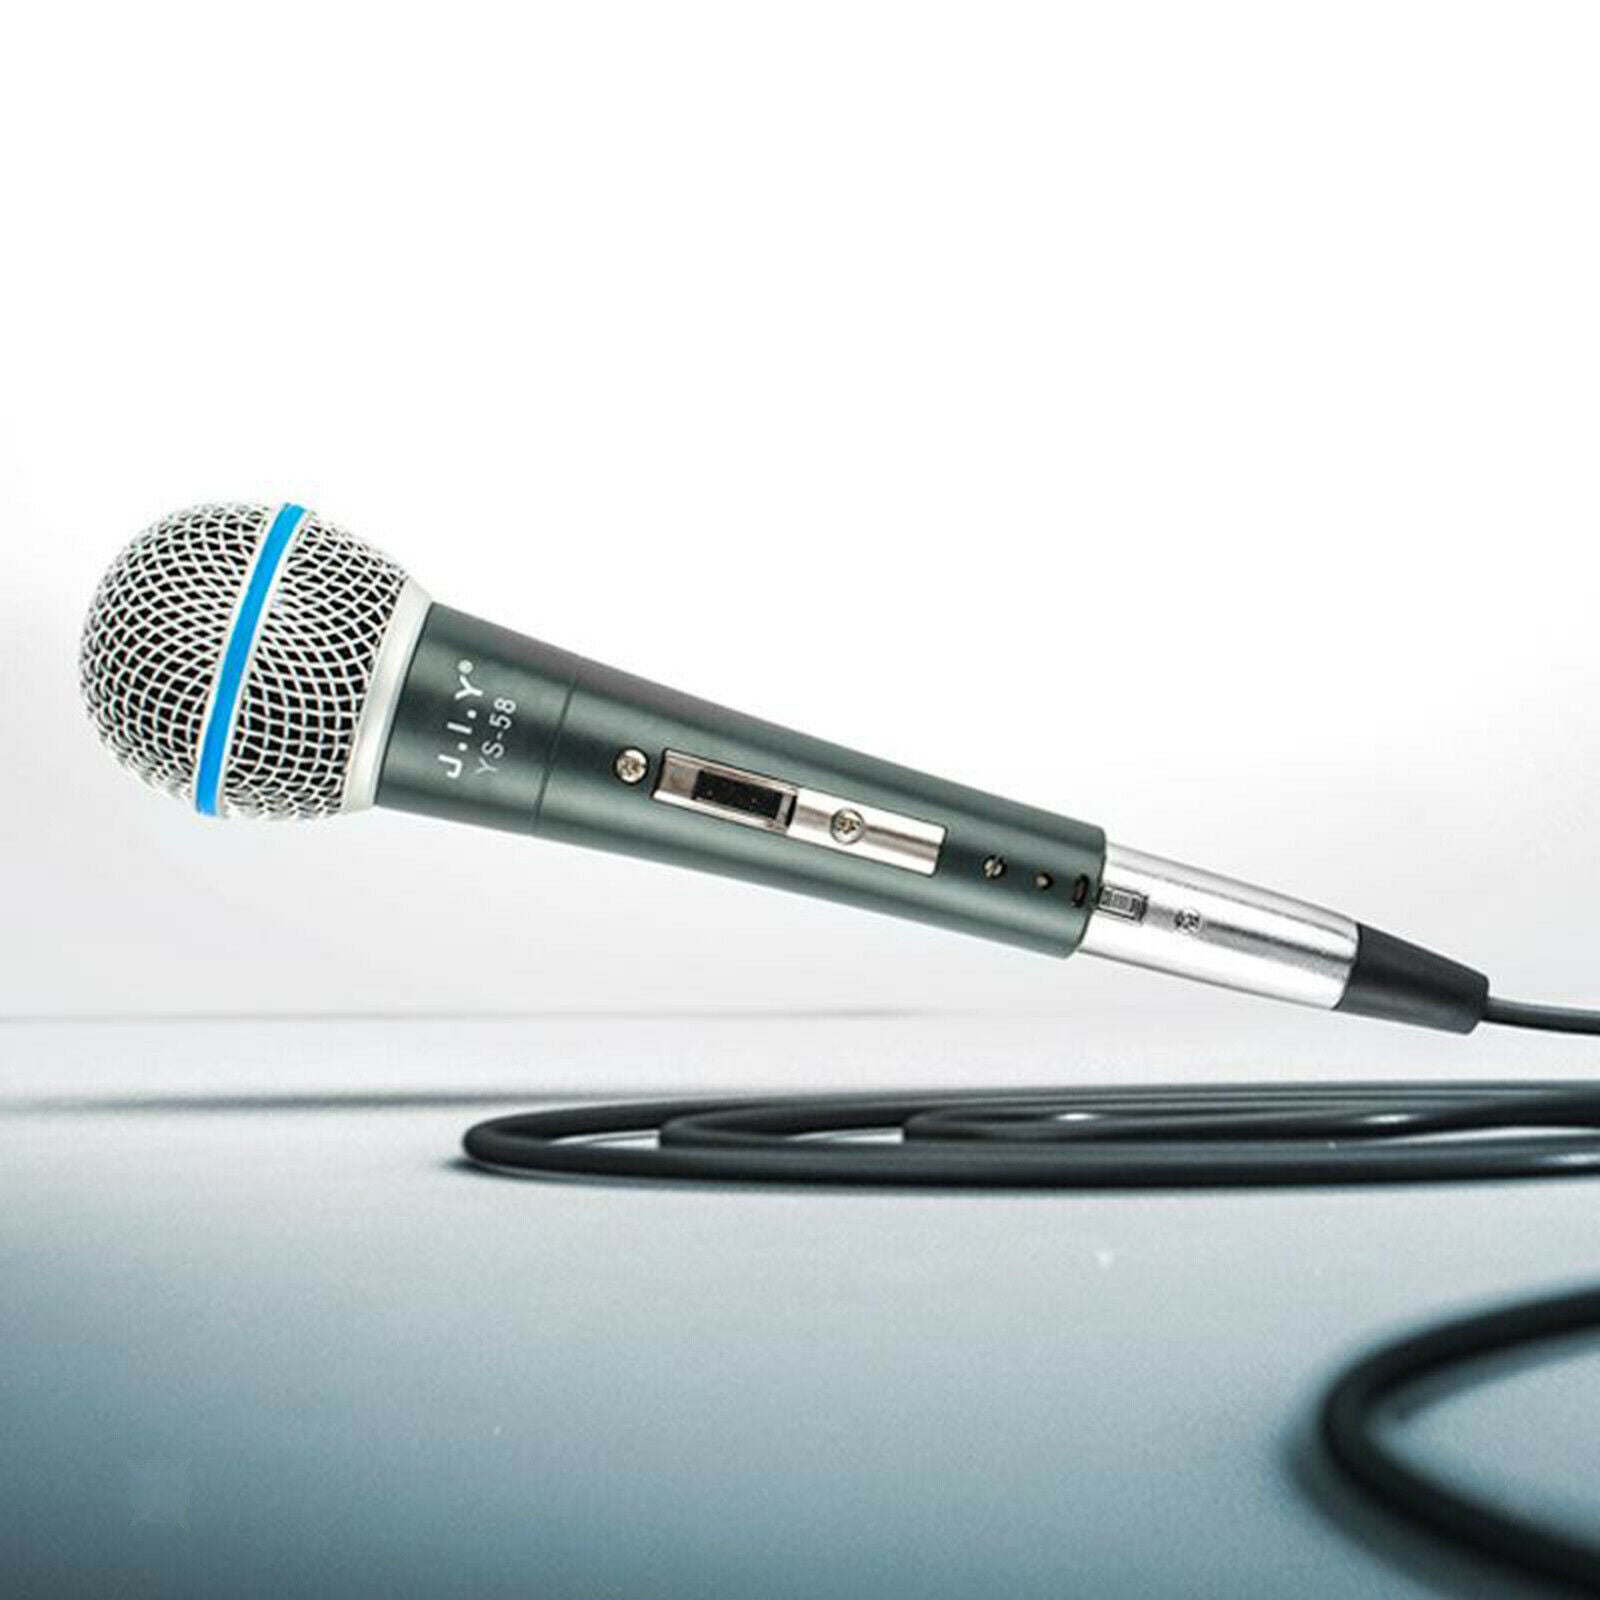 Entertainer Karaoke Microphone KTV Studio Live Handheld Vocal Cardioid Mic